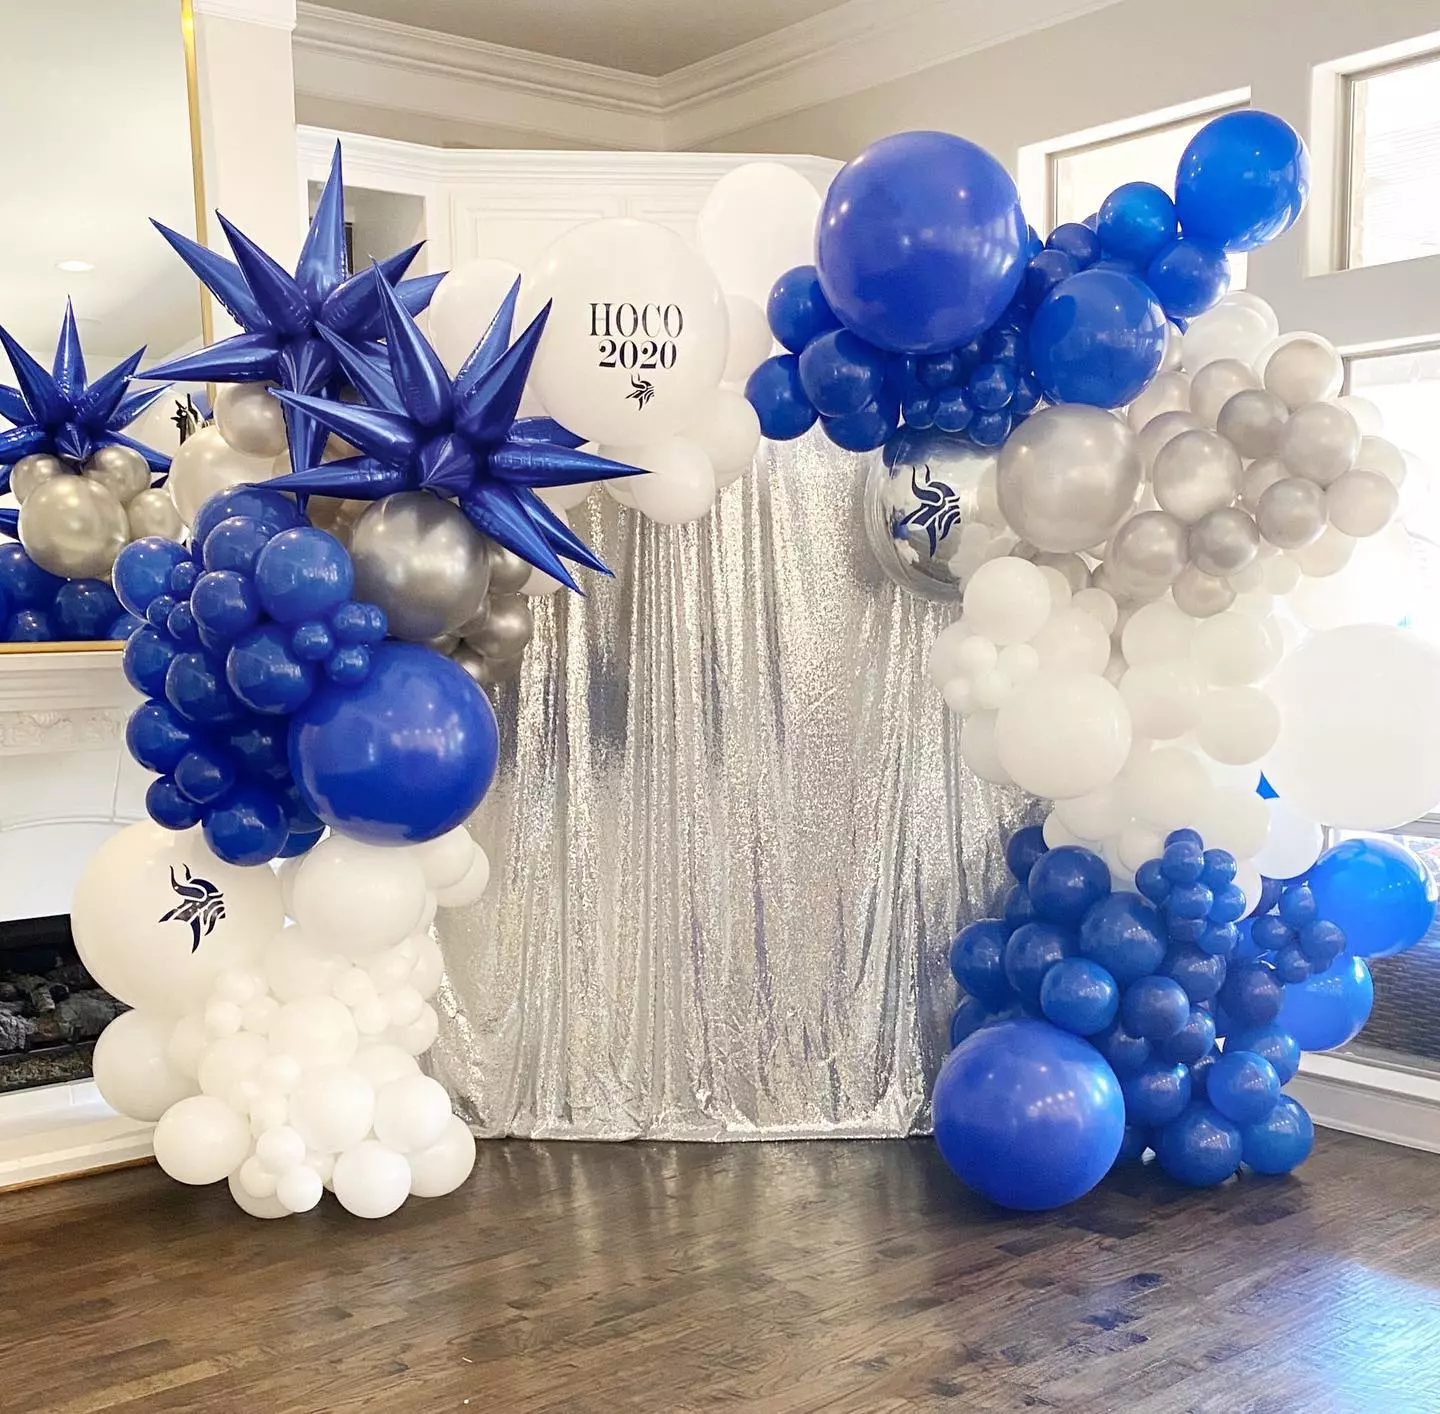 Balloon decor for Homecoming